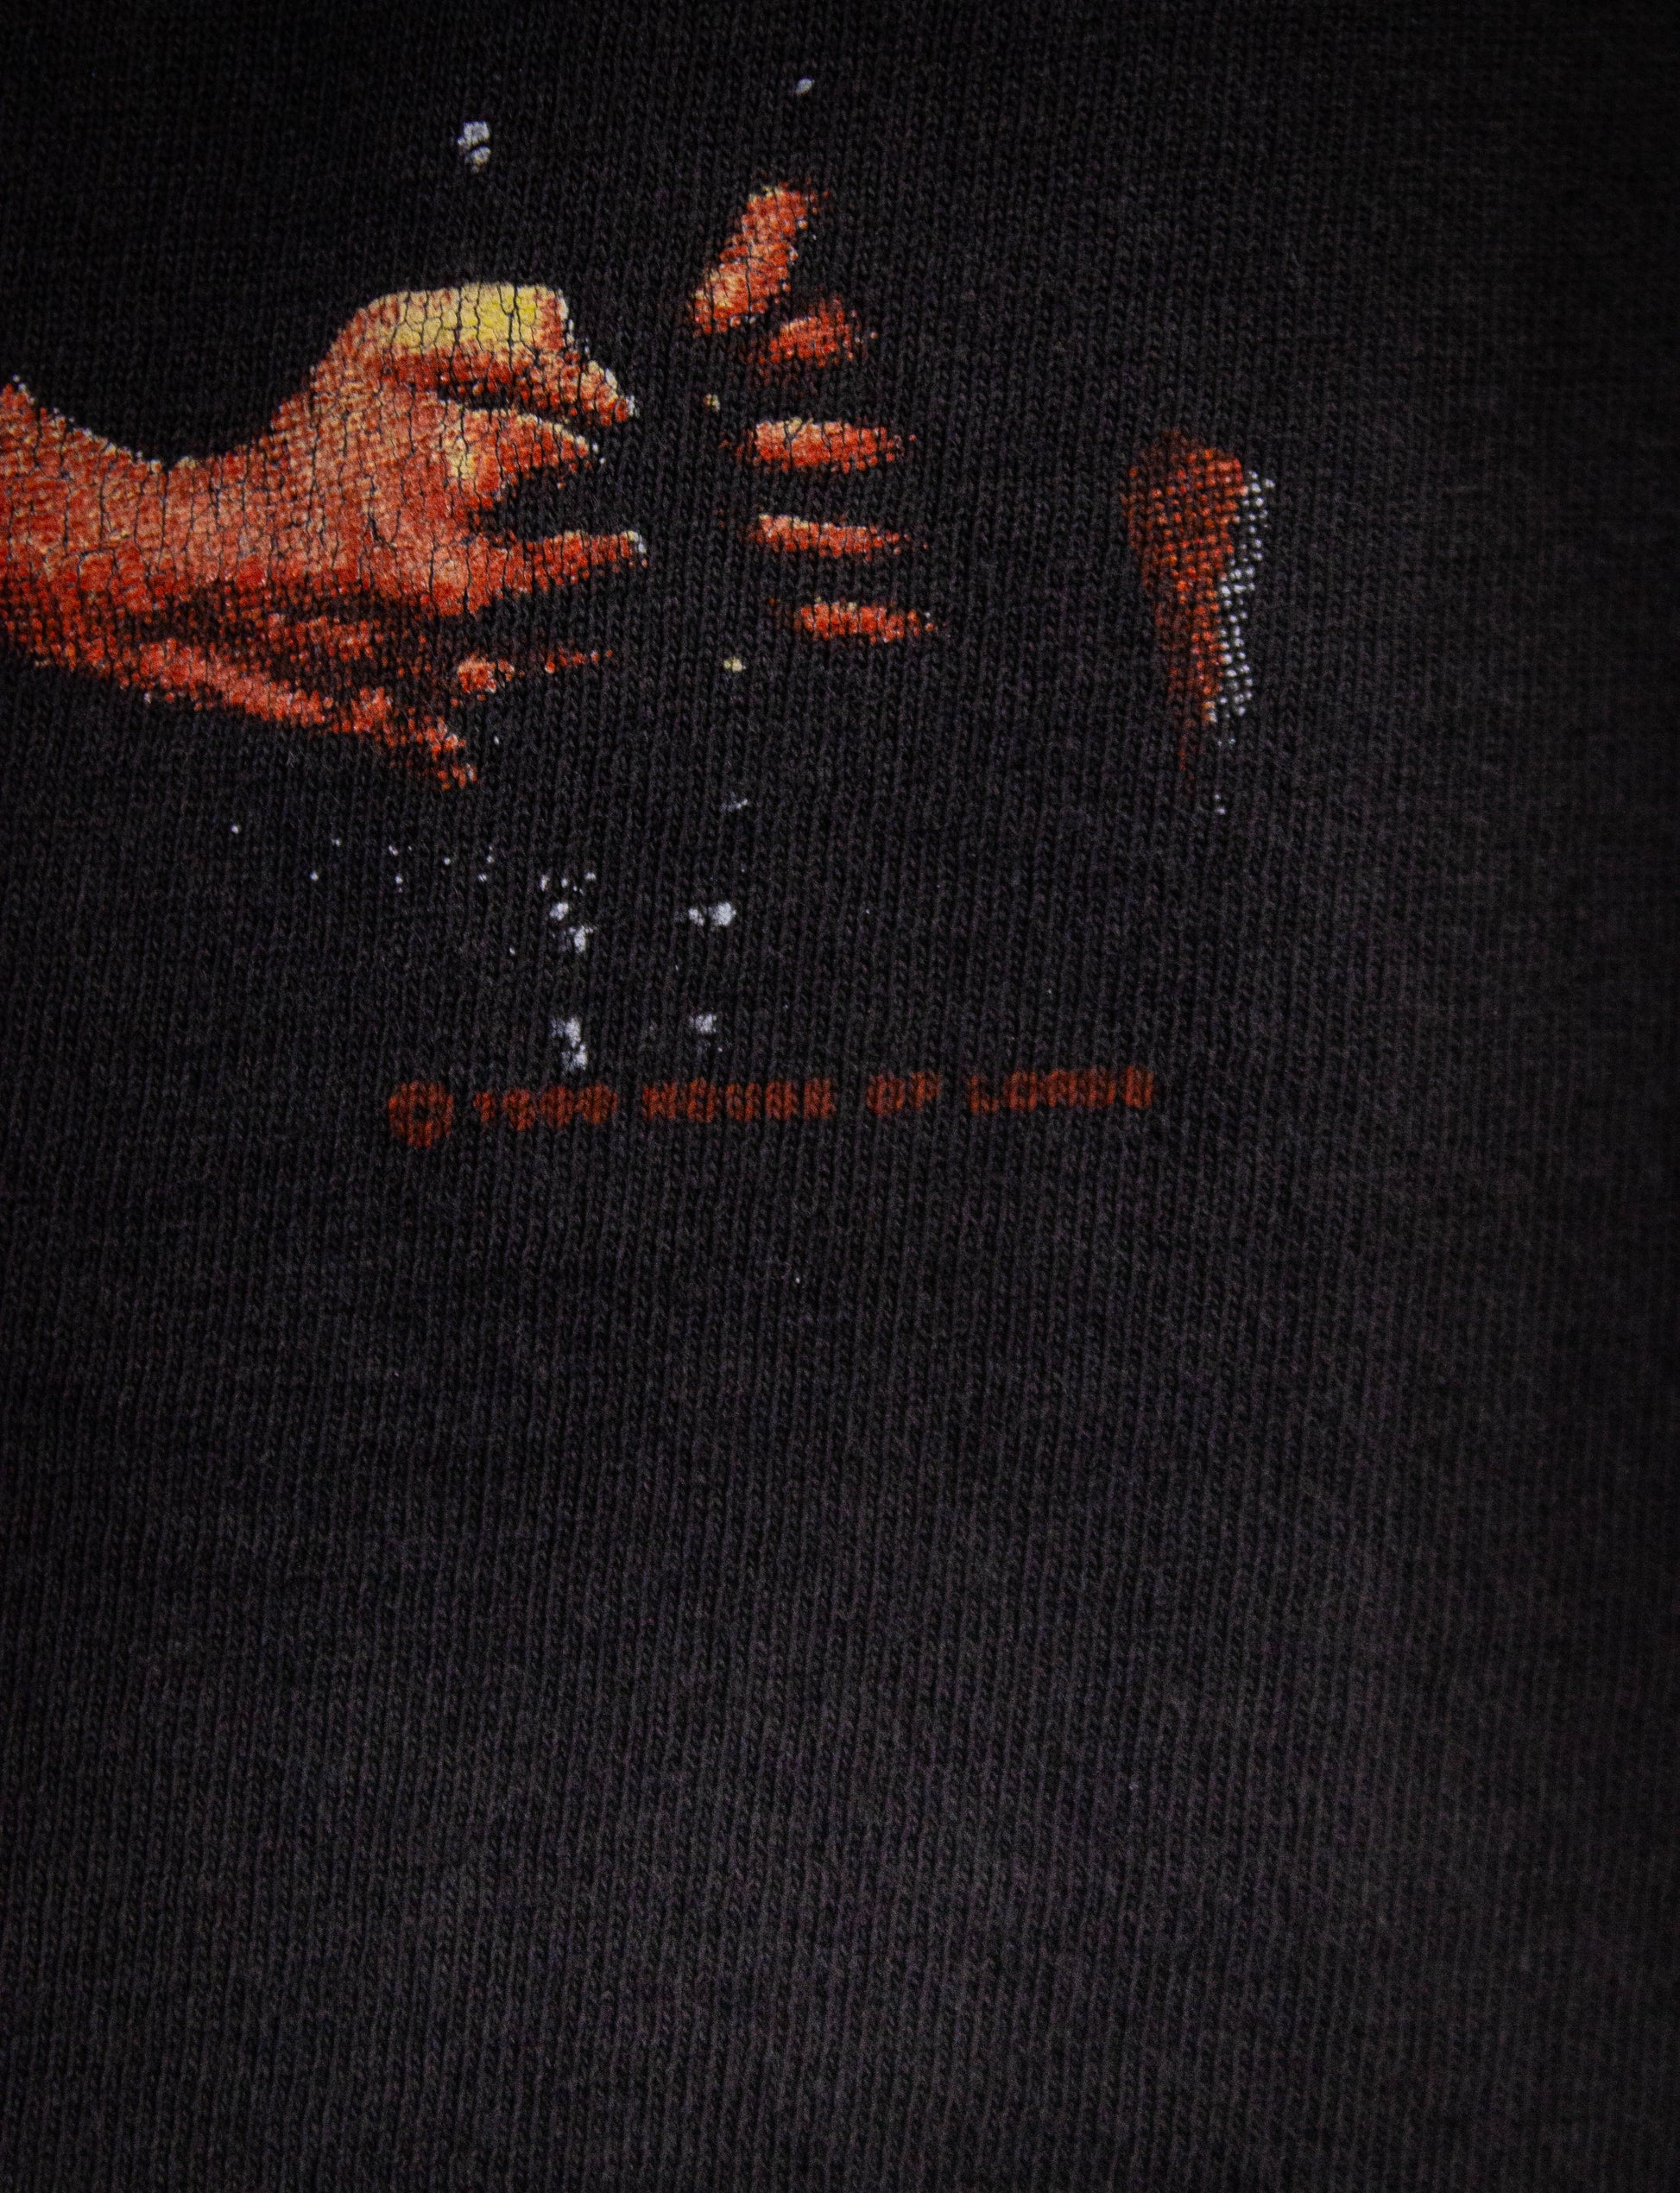 Vintage House of Lords Sahara Tour Concert T Shirt 1990-91 Black Medium